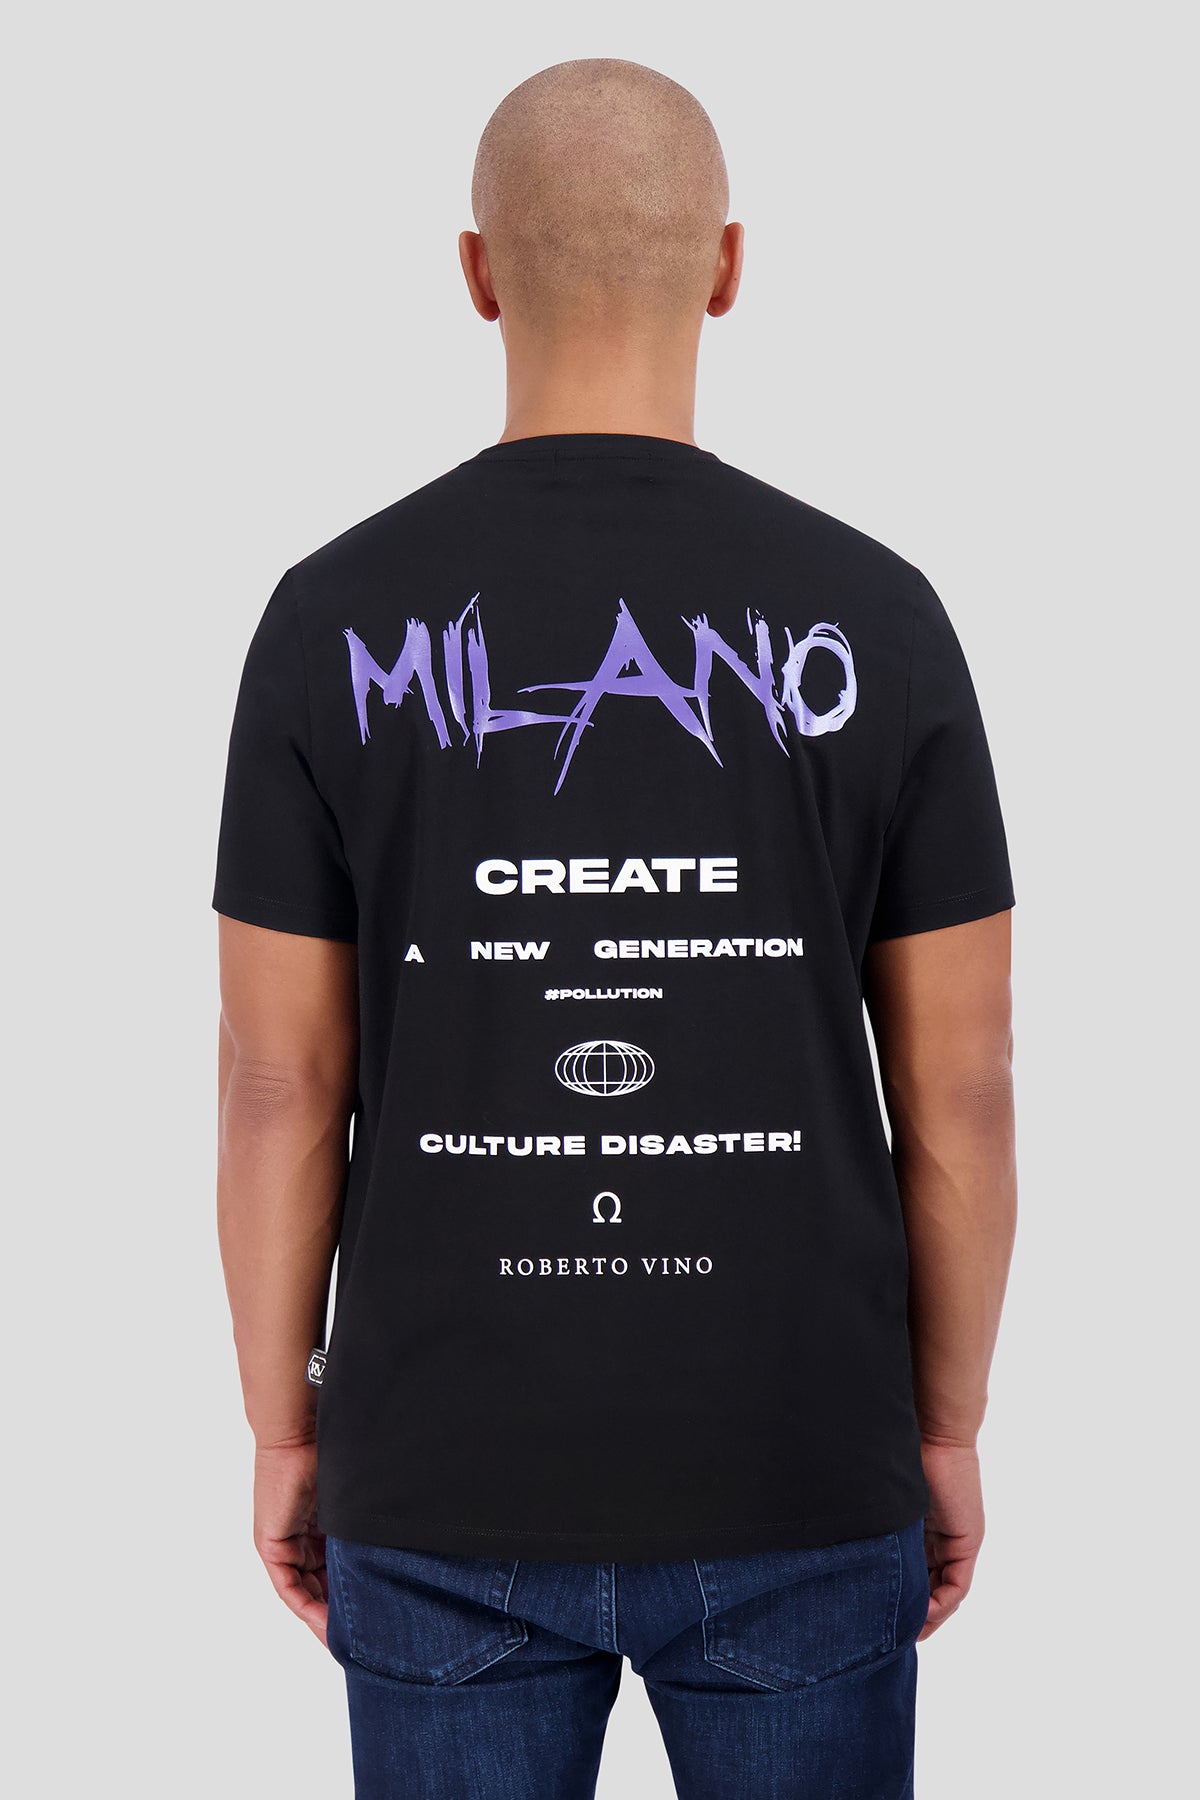 Milano T-shirt